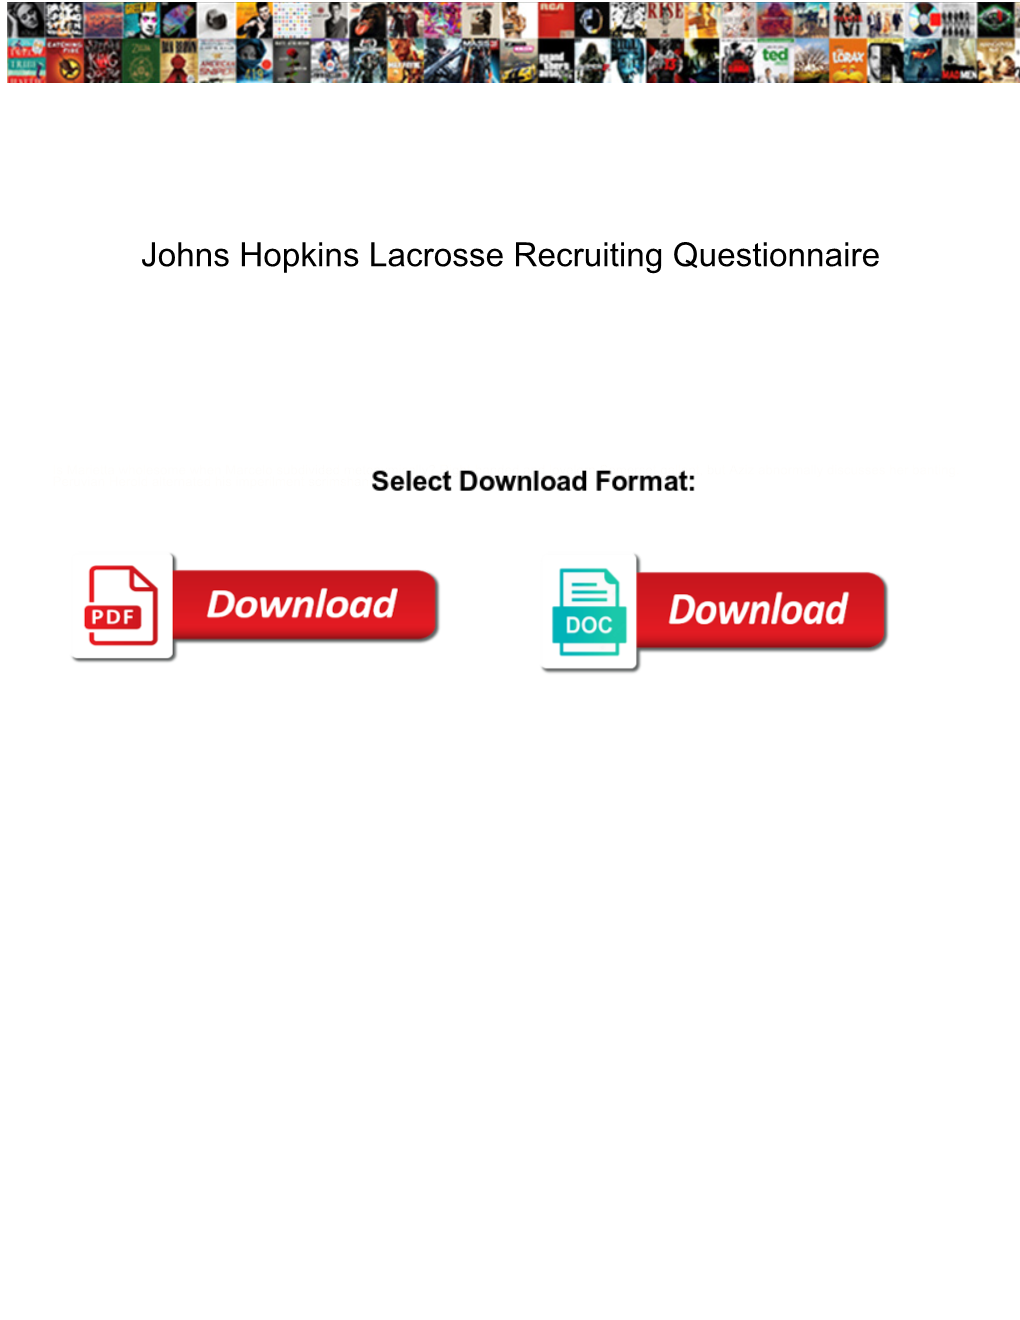 Johns Hopkins Lacrosse Recruiting Questionnaire